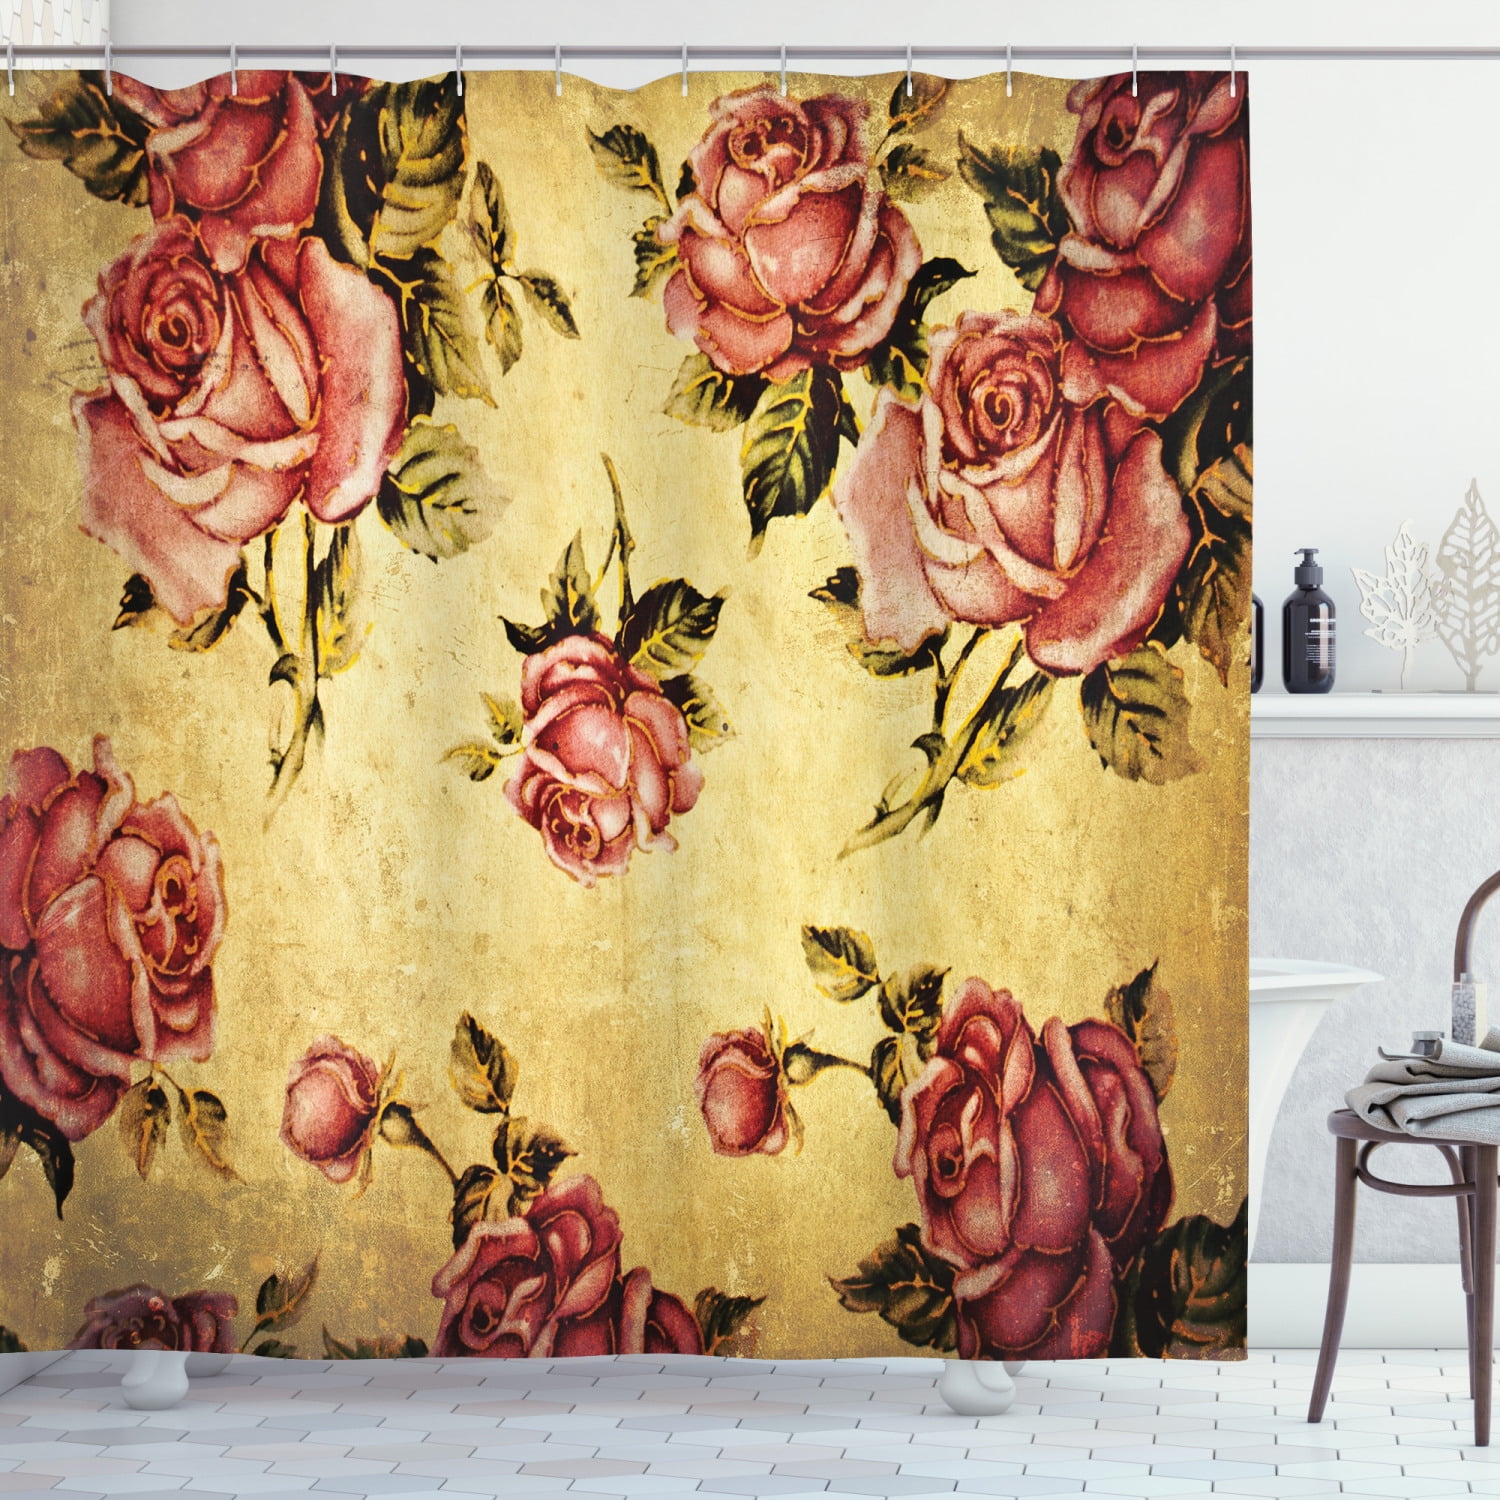 Vintage Rose Postcard Shower Curtain Set Waterproof Fabric Decor Curtains& Hooks 